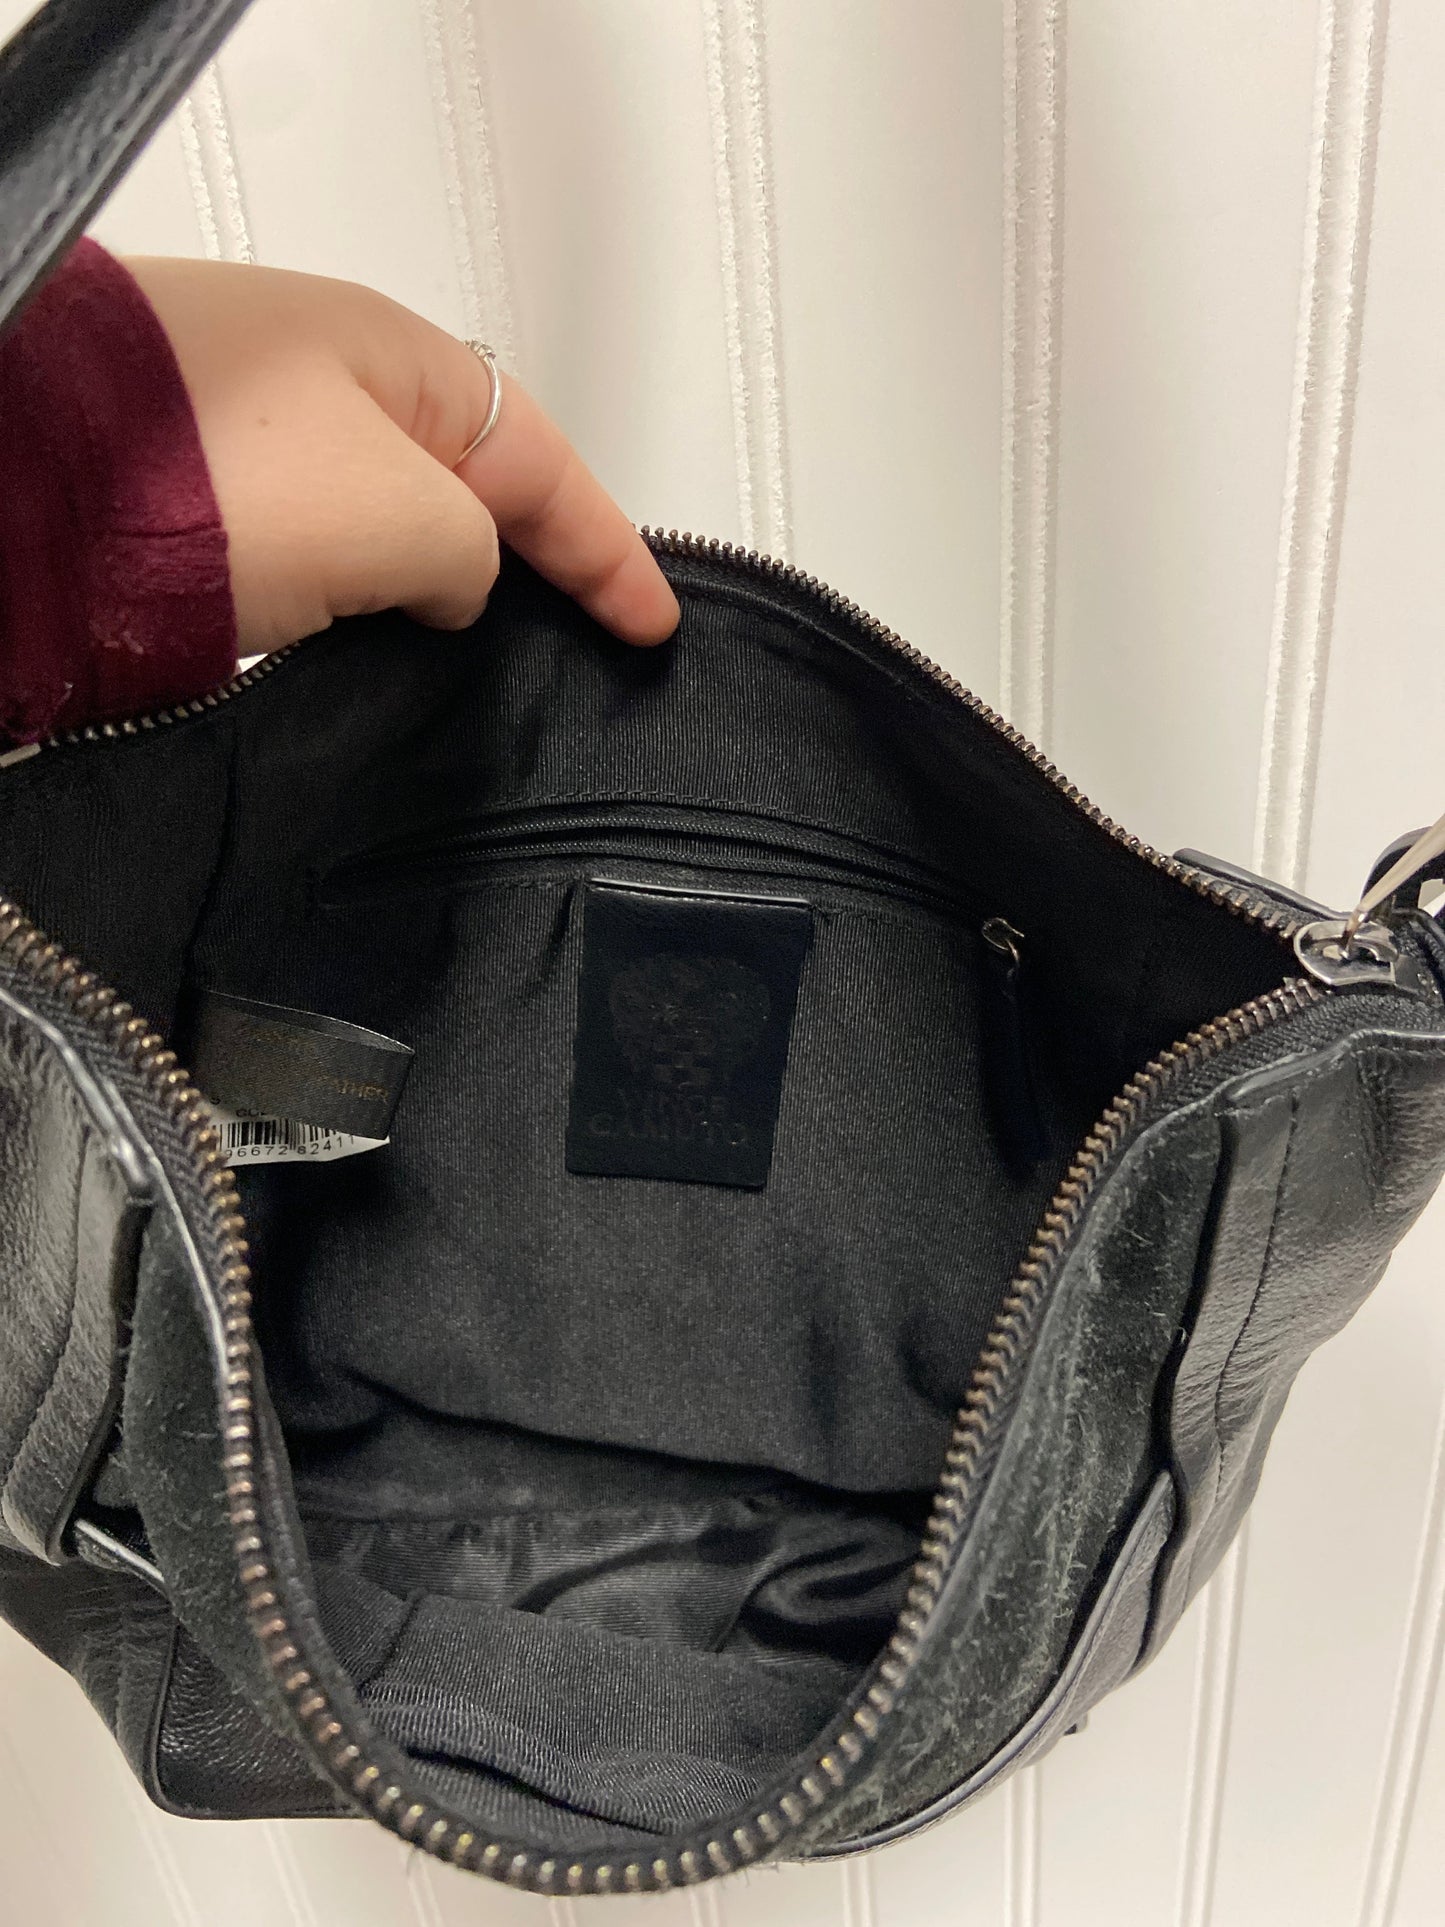 Handbag Leather By Vince Camuto  Size: Medium